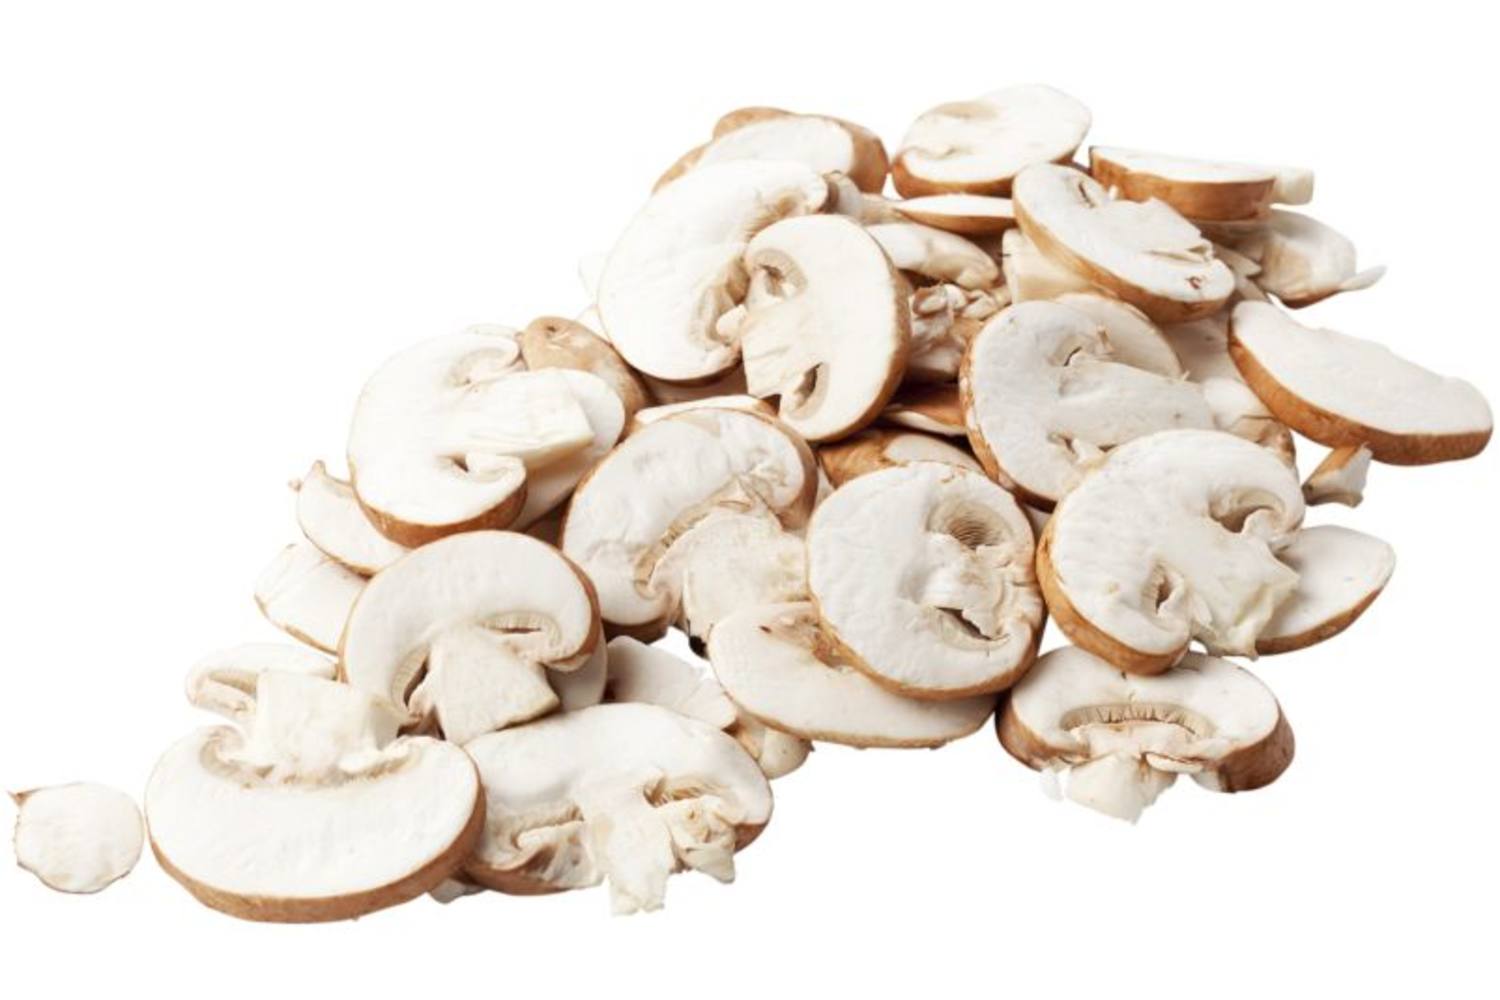 BIO Kastanje champignon schijf 250gr kist 4 stuks 1